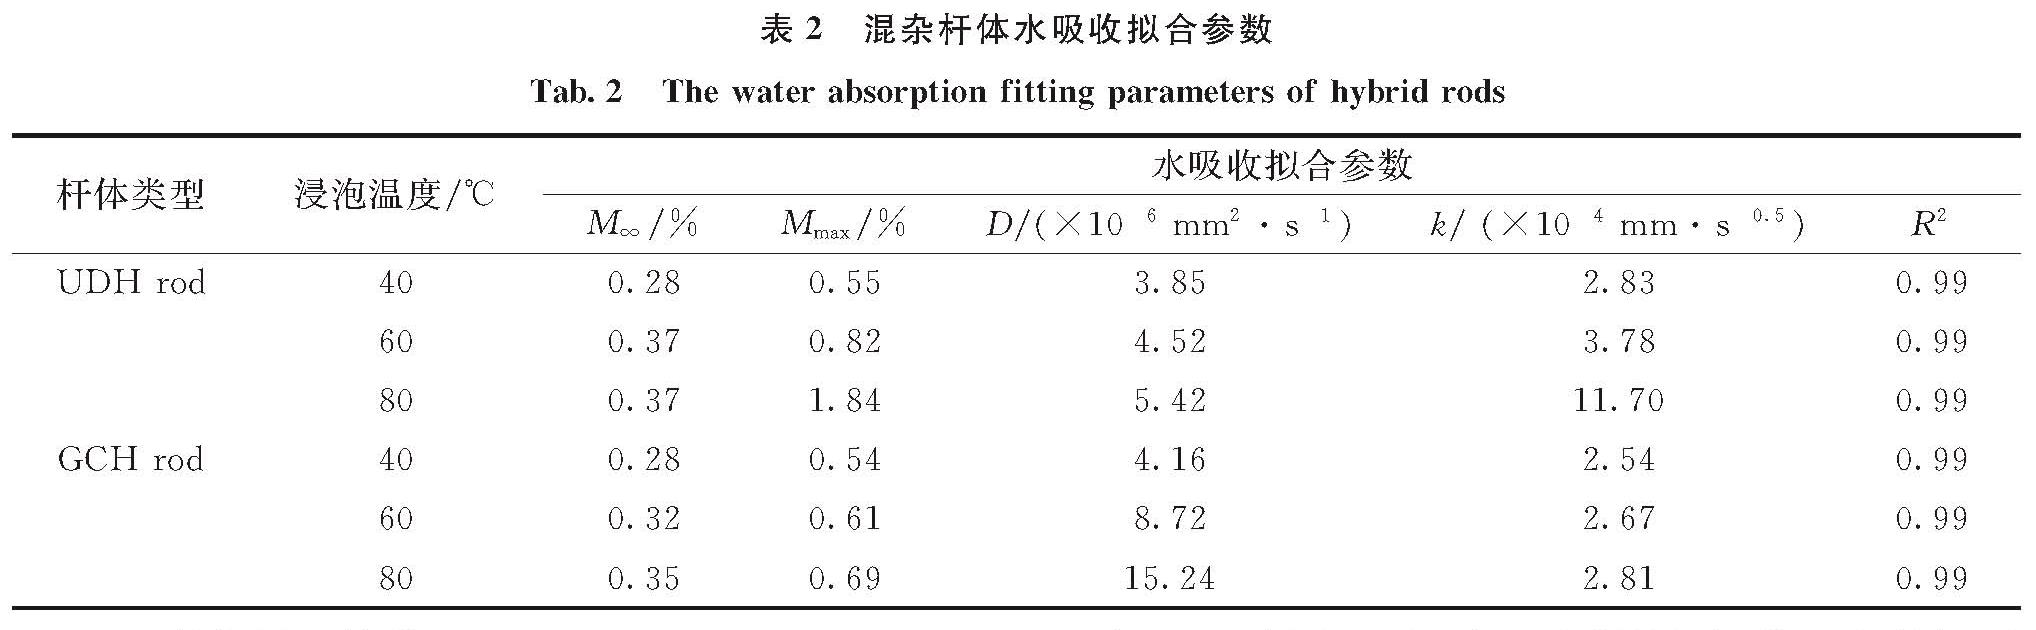 表2 混杂杆体水吸收拟合参数<br/>Tab.2 The water absorption fitting parameters of hybrid rods